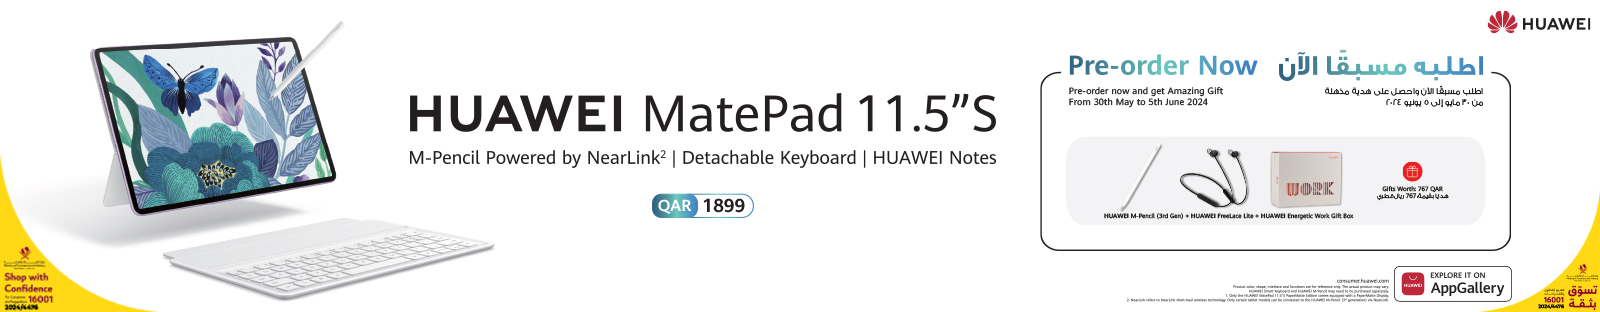 Huawei MatePad 11.5 S Pre-Order (Web)